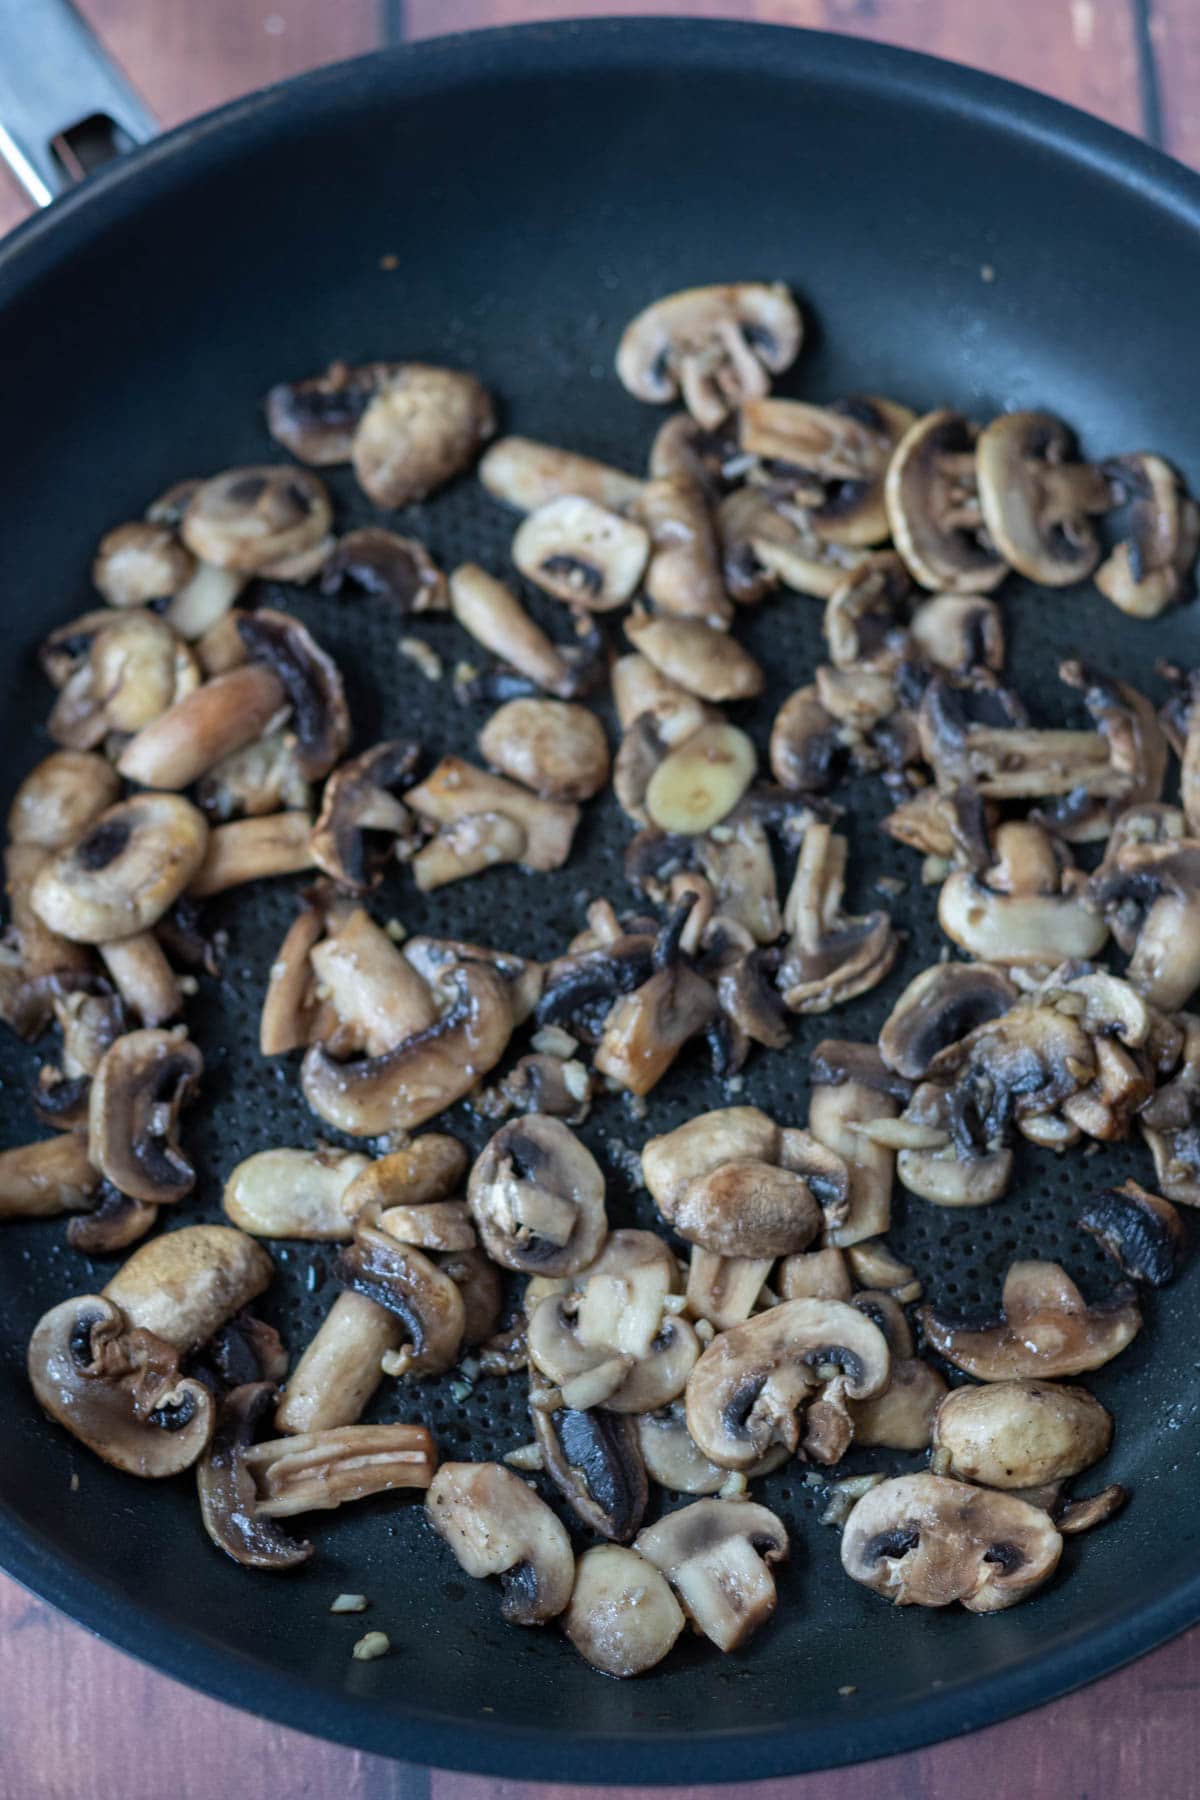 Sauté mushrooms and garlic in a large frying pan.